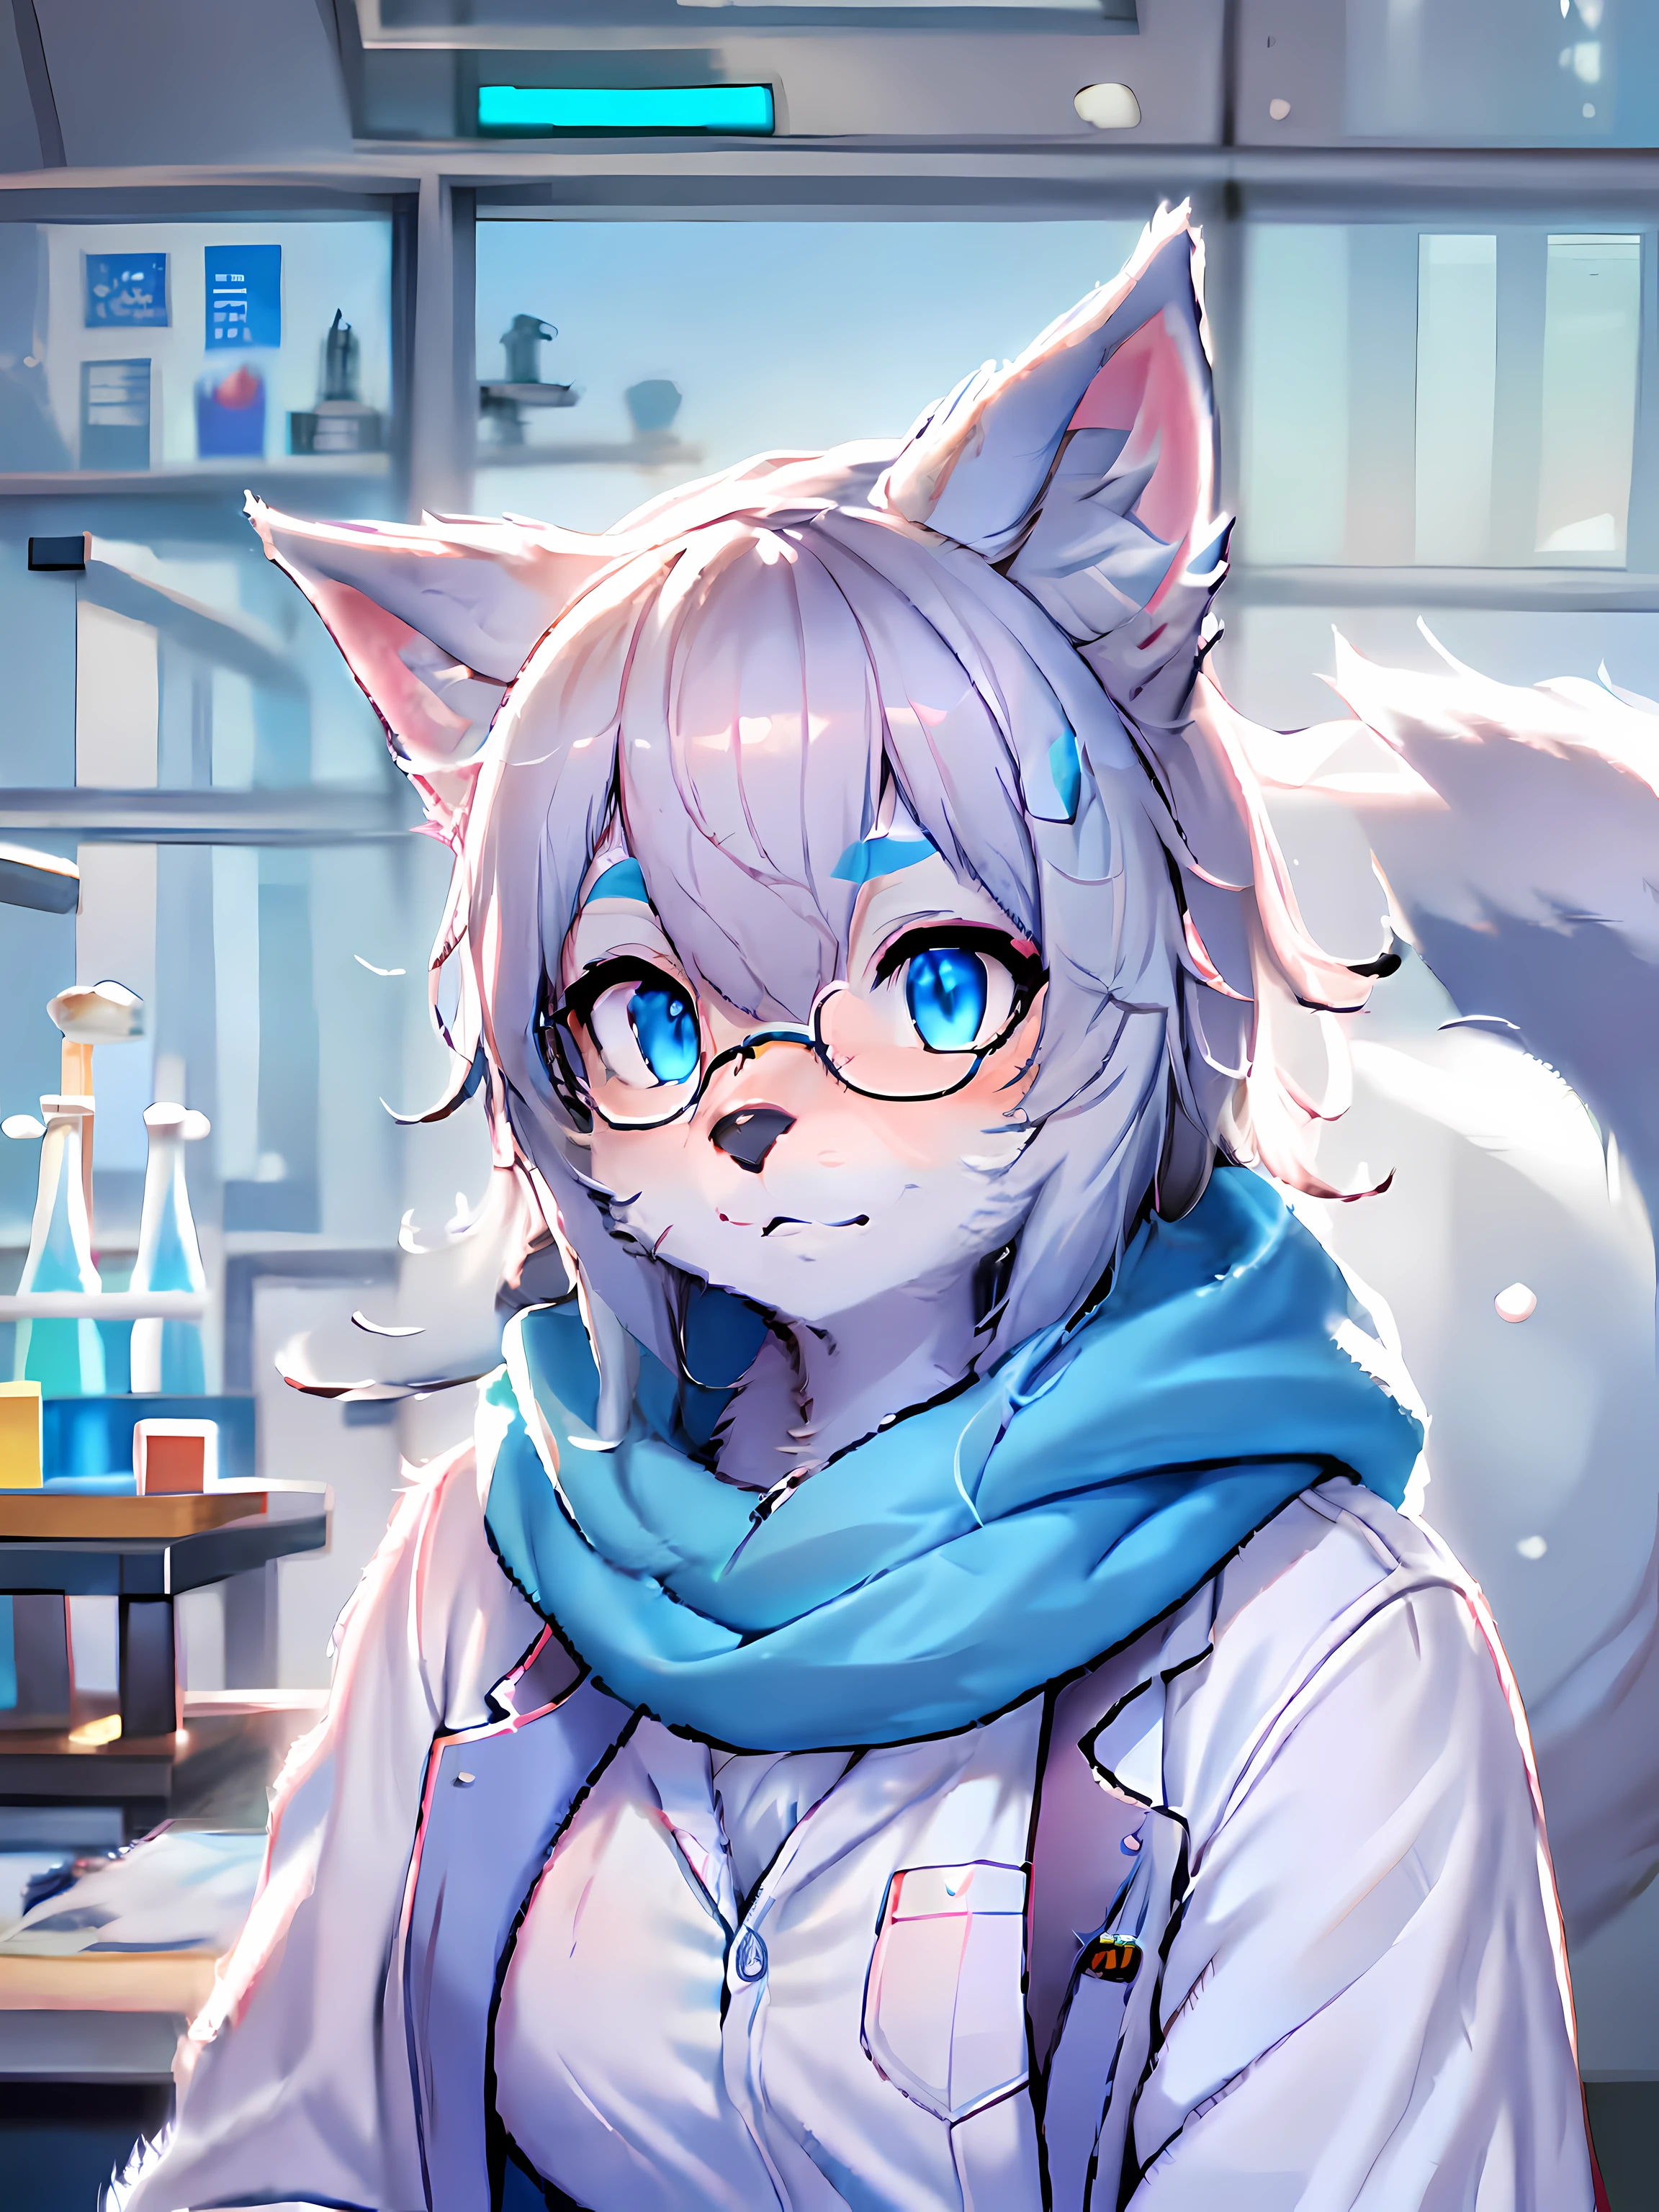 Anime character with 白狐 ears wearing lab coat and blue scarf,白狐，蓬鬆的藍色毛皮和藍色的尾巴,戴半框眼鏡,穿著白大褂的北極狐美女,  福斯科學家，實驗室內, 專業毛茸茸的繪圖